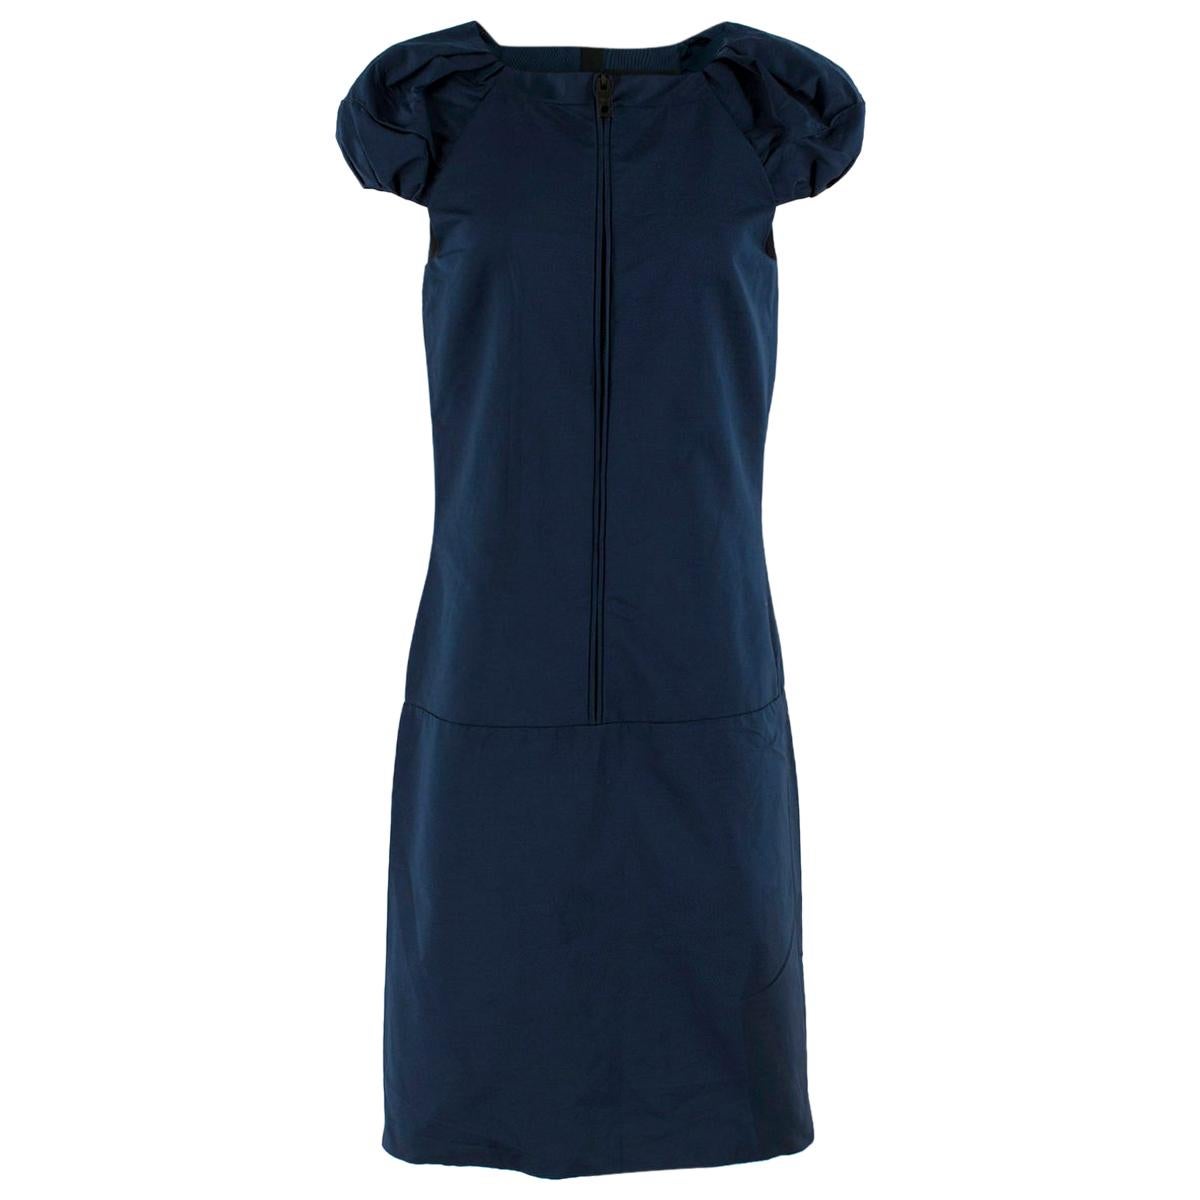 Burberry Prorsum Dark Blue Puff Sleeve Dress - Size Medium For Sale